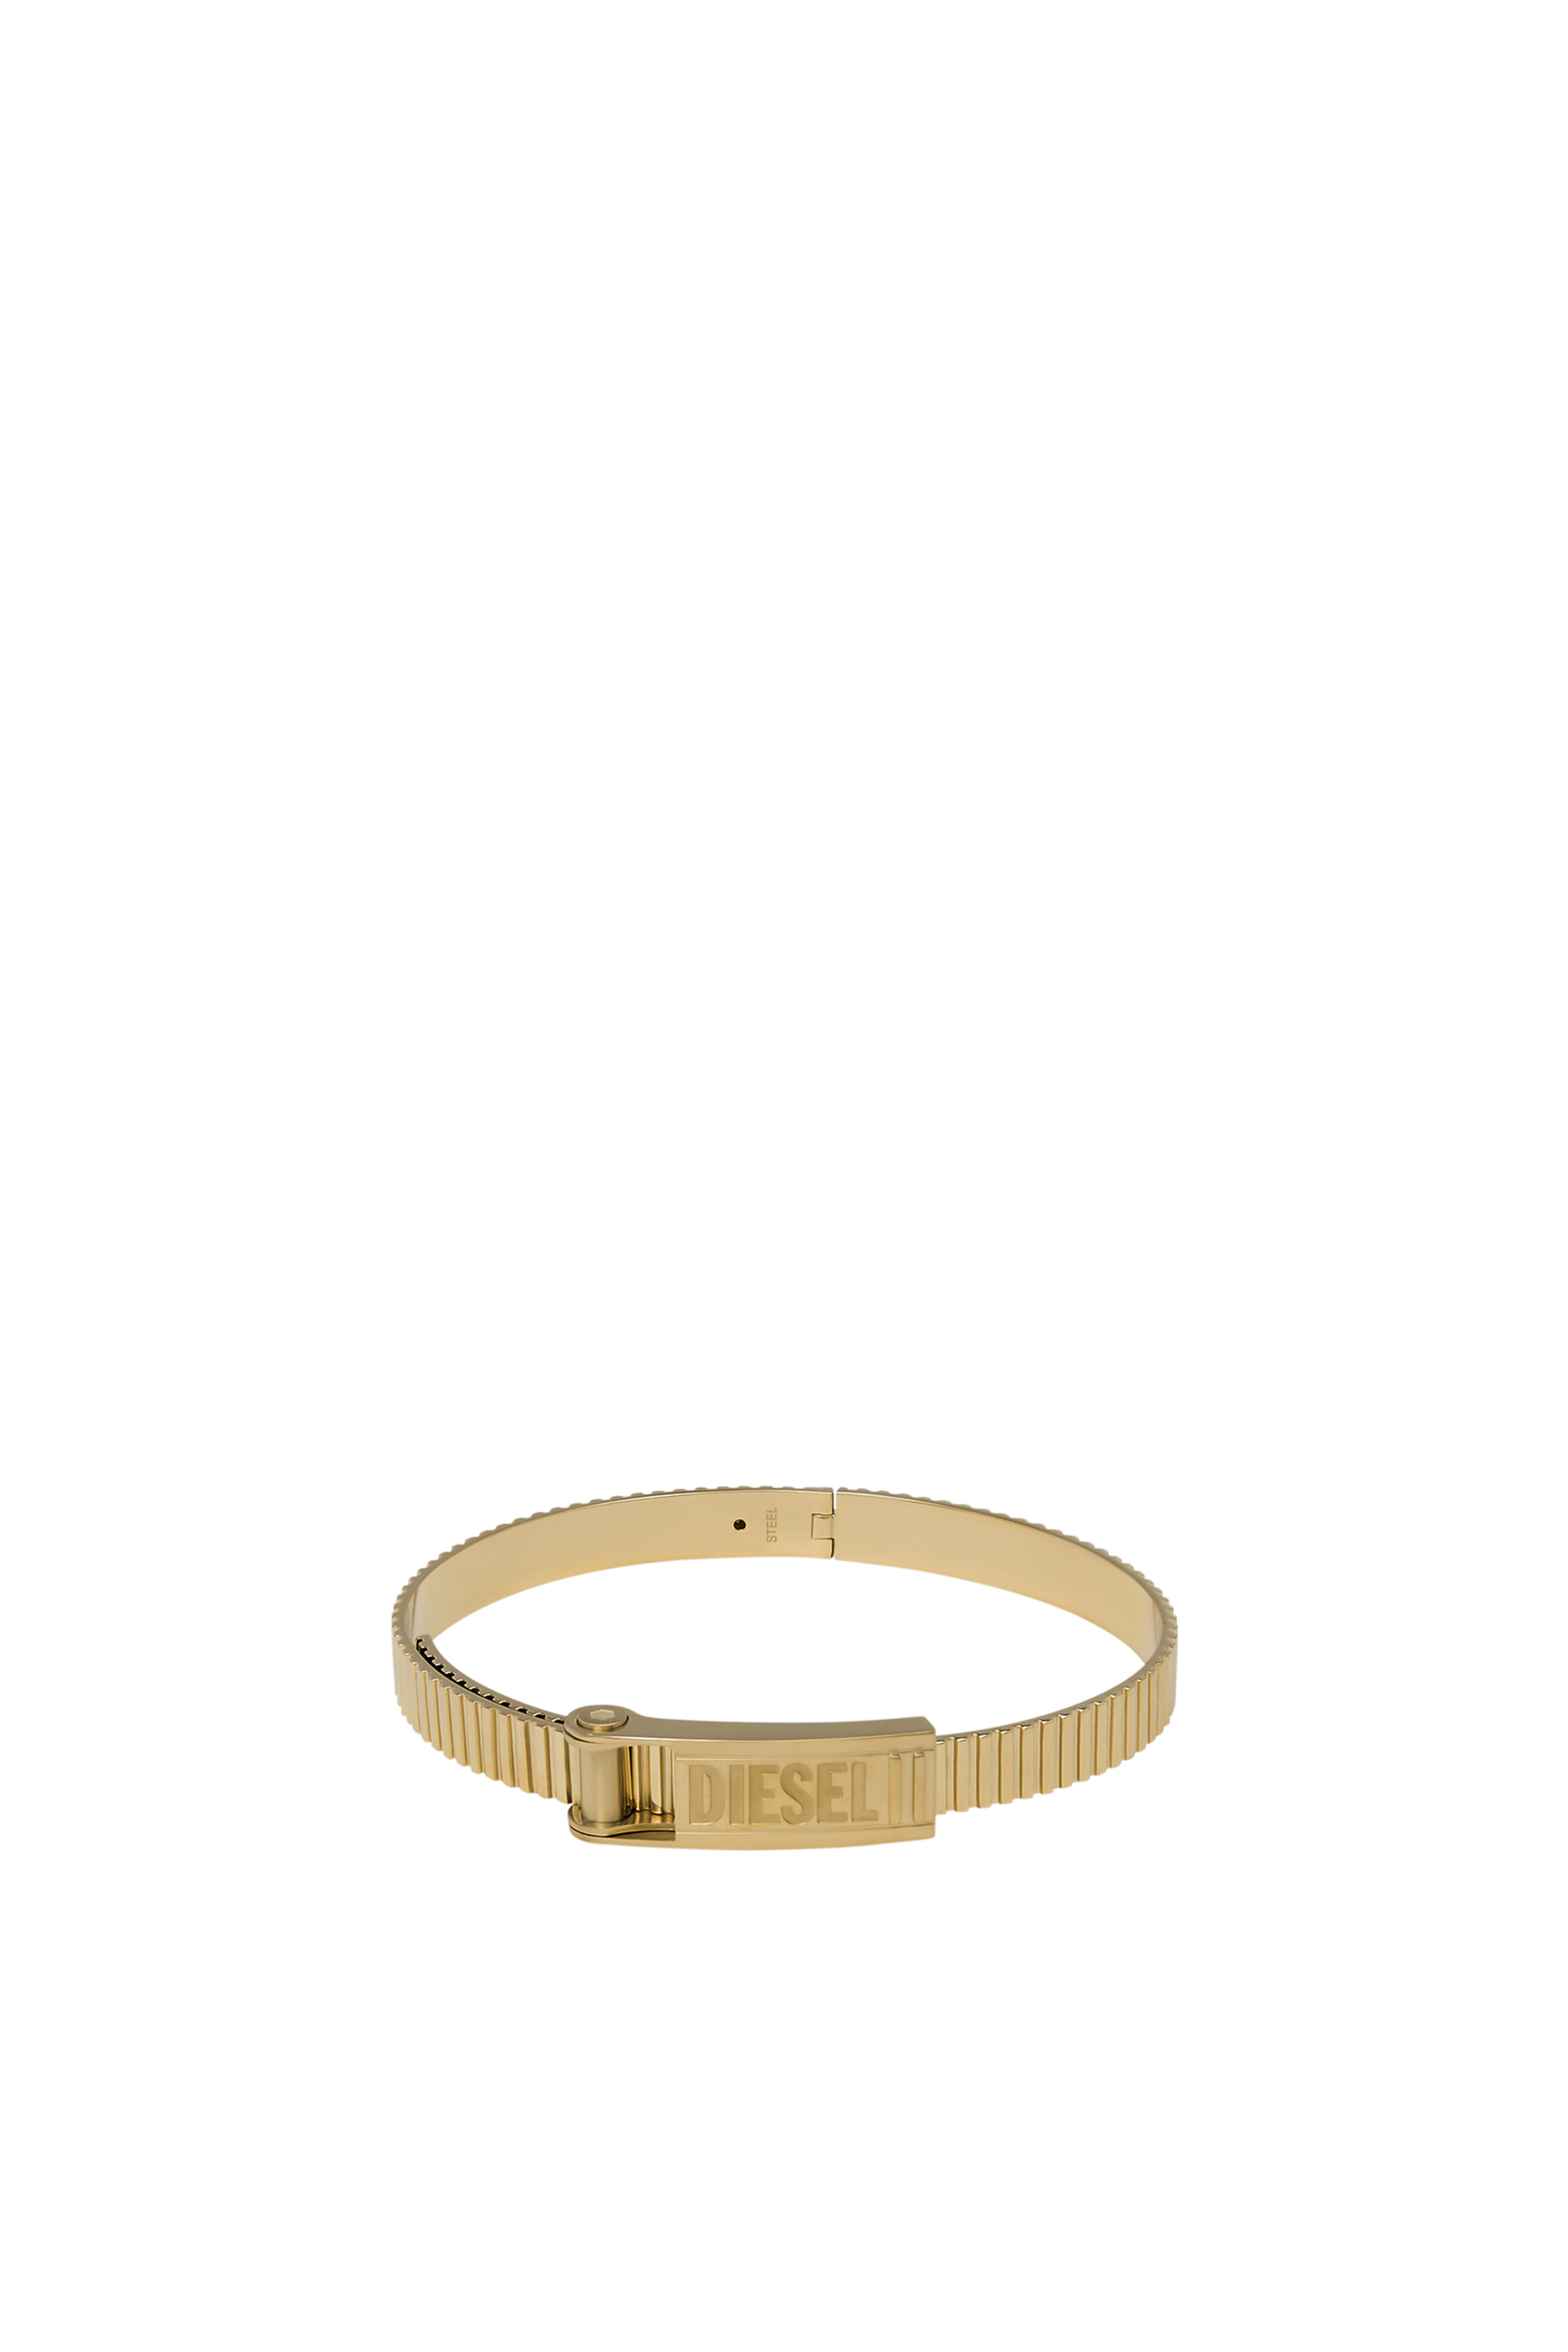 Diesel - DX1357, Unisex Gold stainless steel stack bracelet in Oro - Image 1